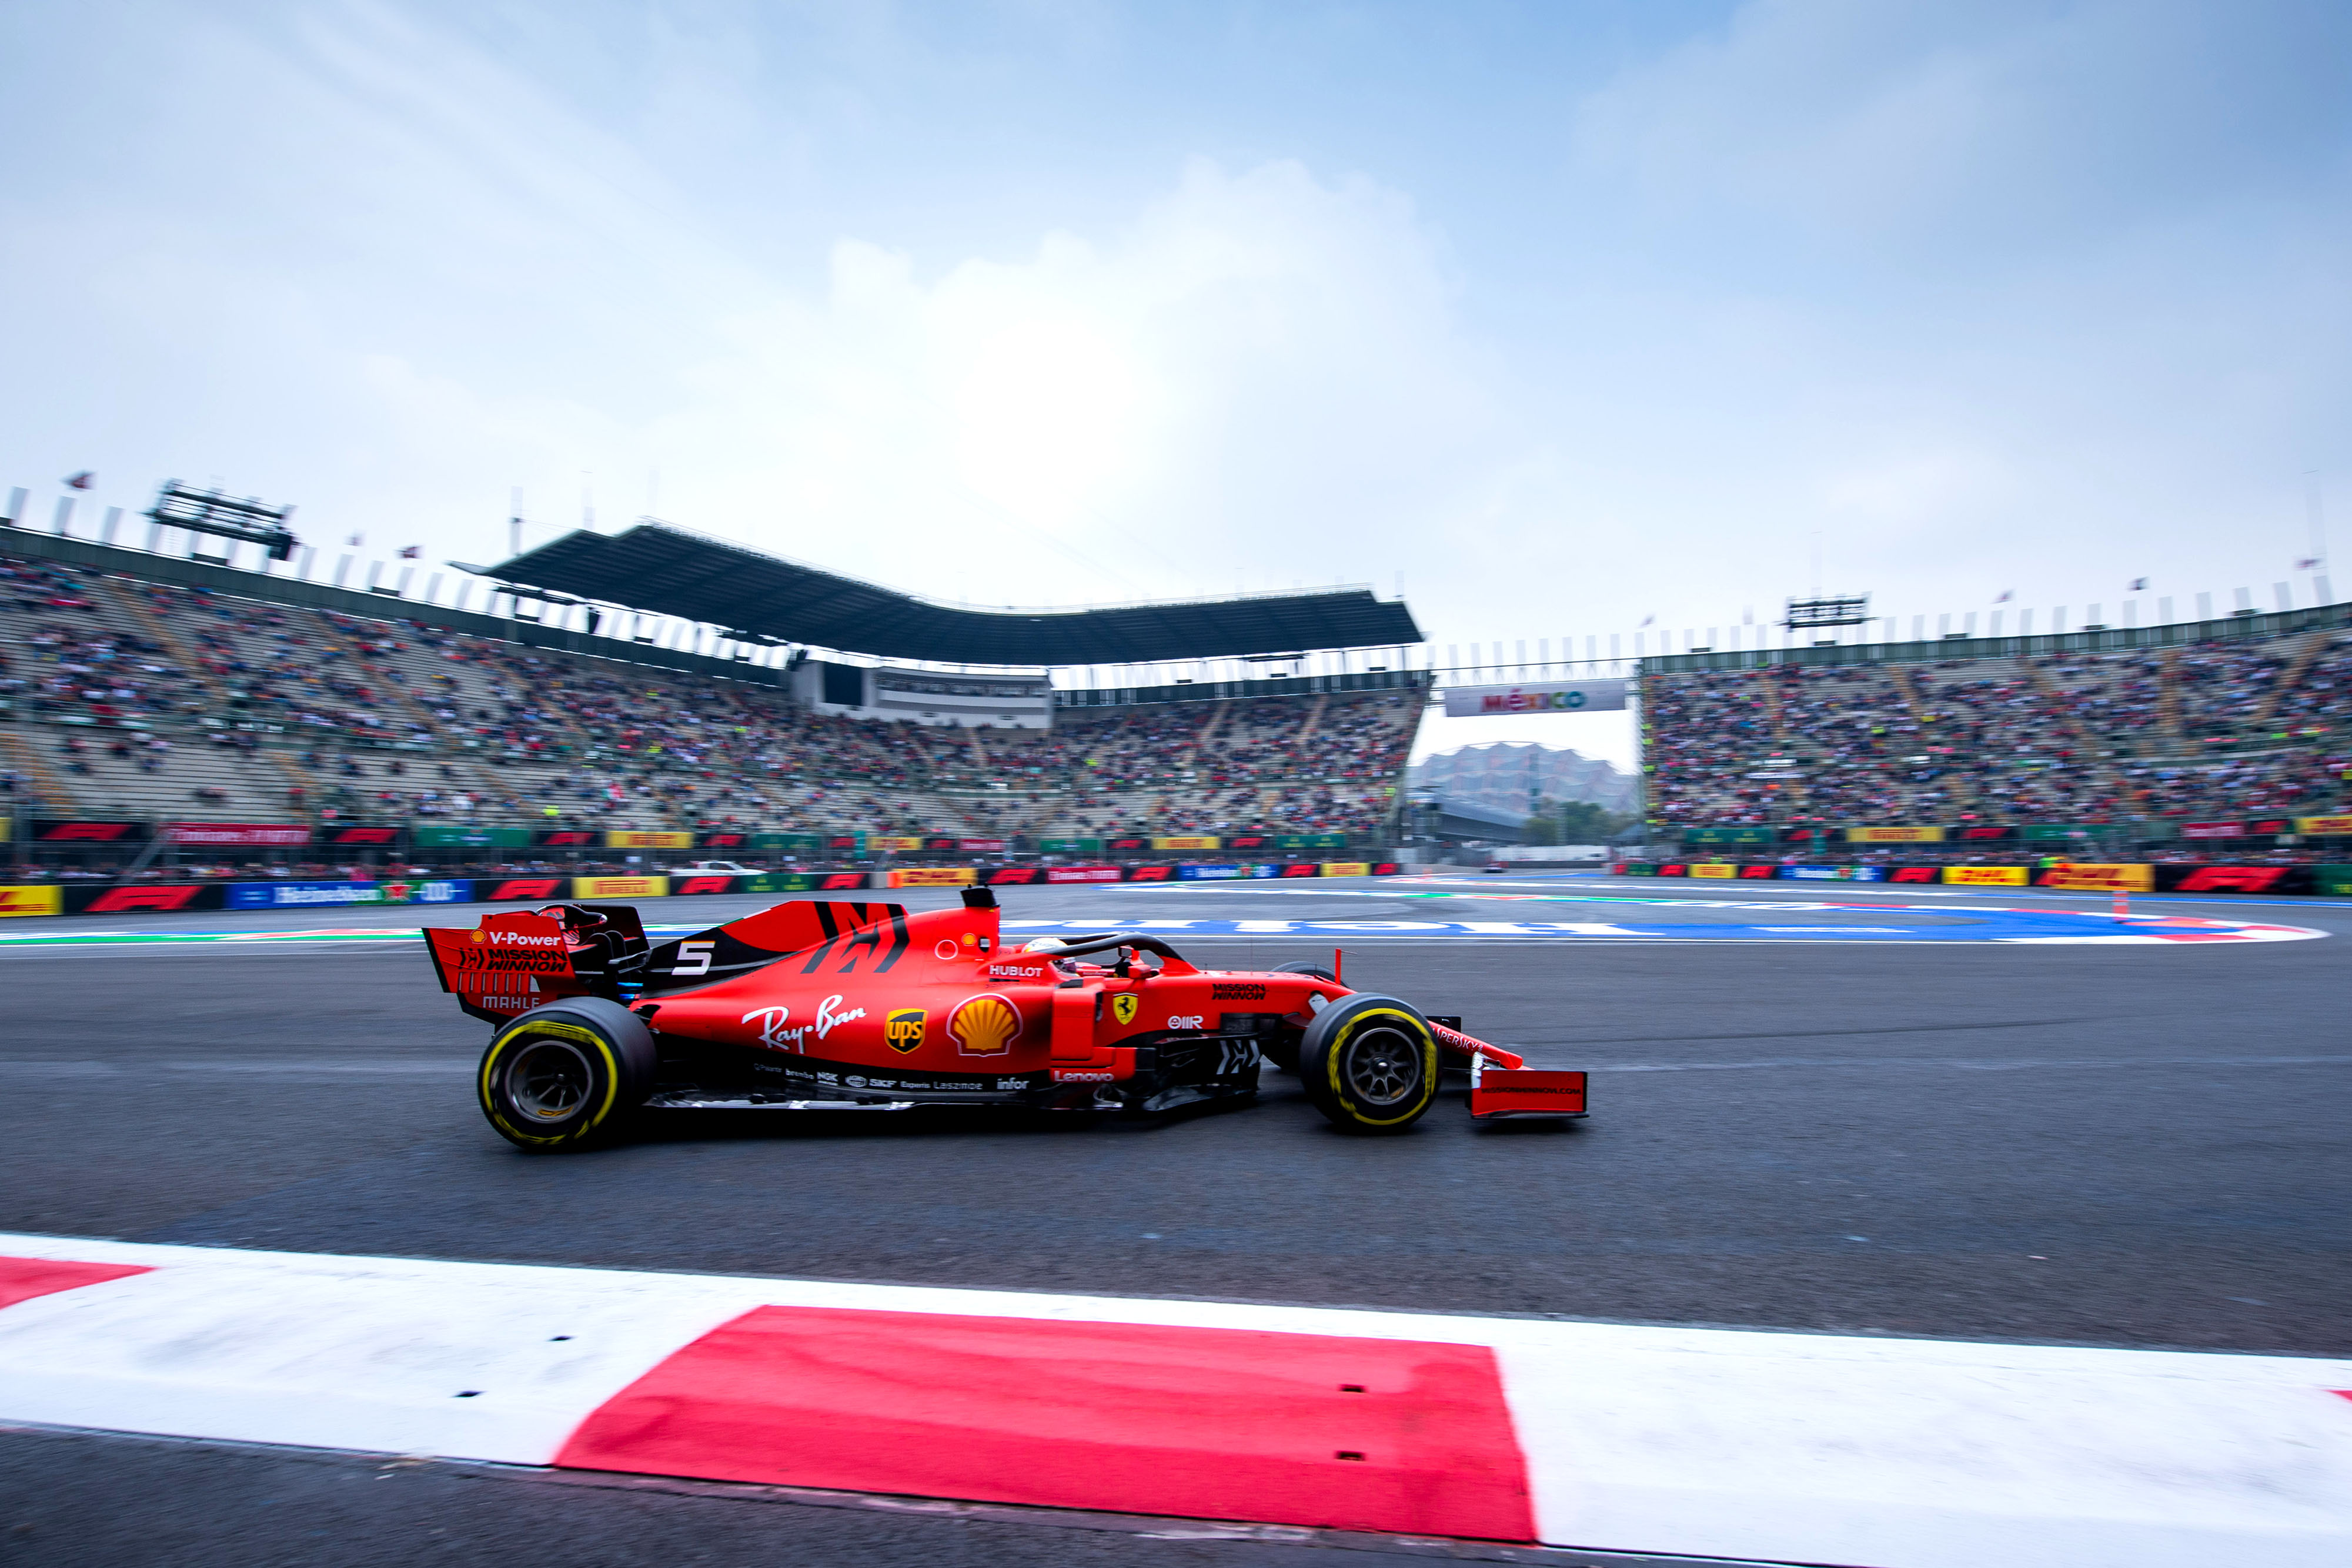 Записи гонок формулы 1. Болид Феттеля Феррари. Ferrari f1 Sebastian Vettel Bolide. Феттель в болиде Феррари. Болид Феррари 2019.